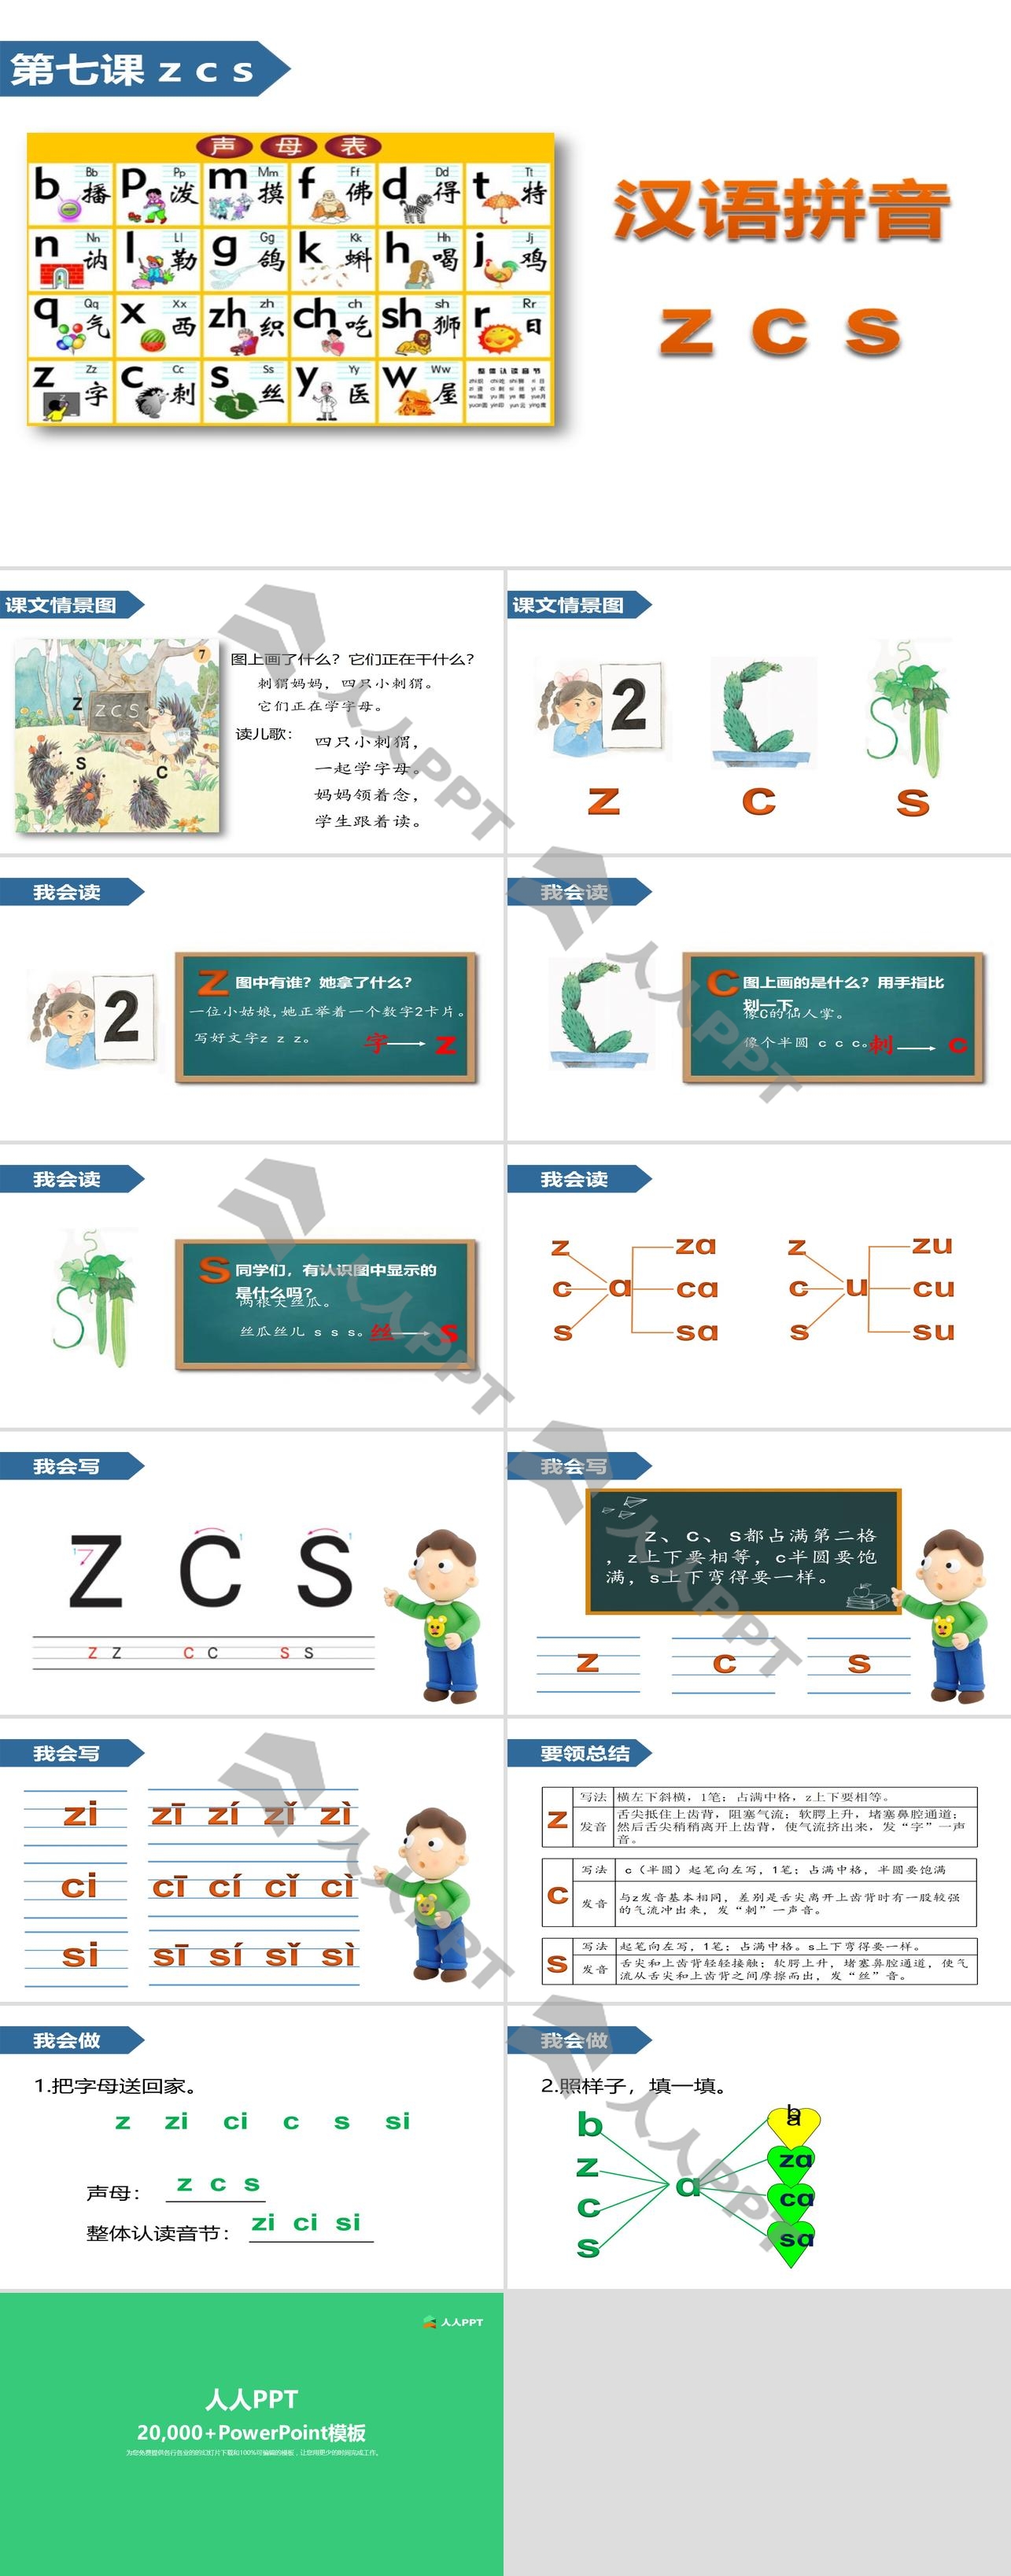 《zcs》汉语拼音PPT长图